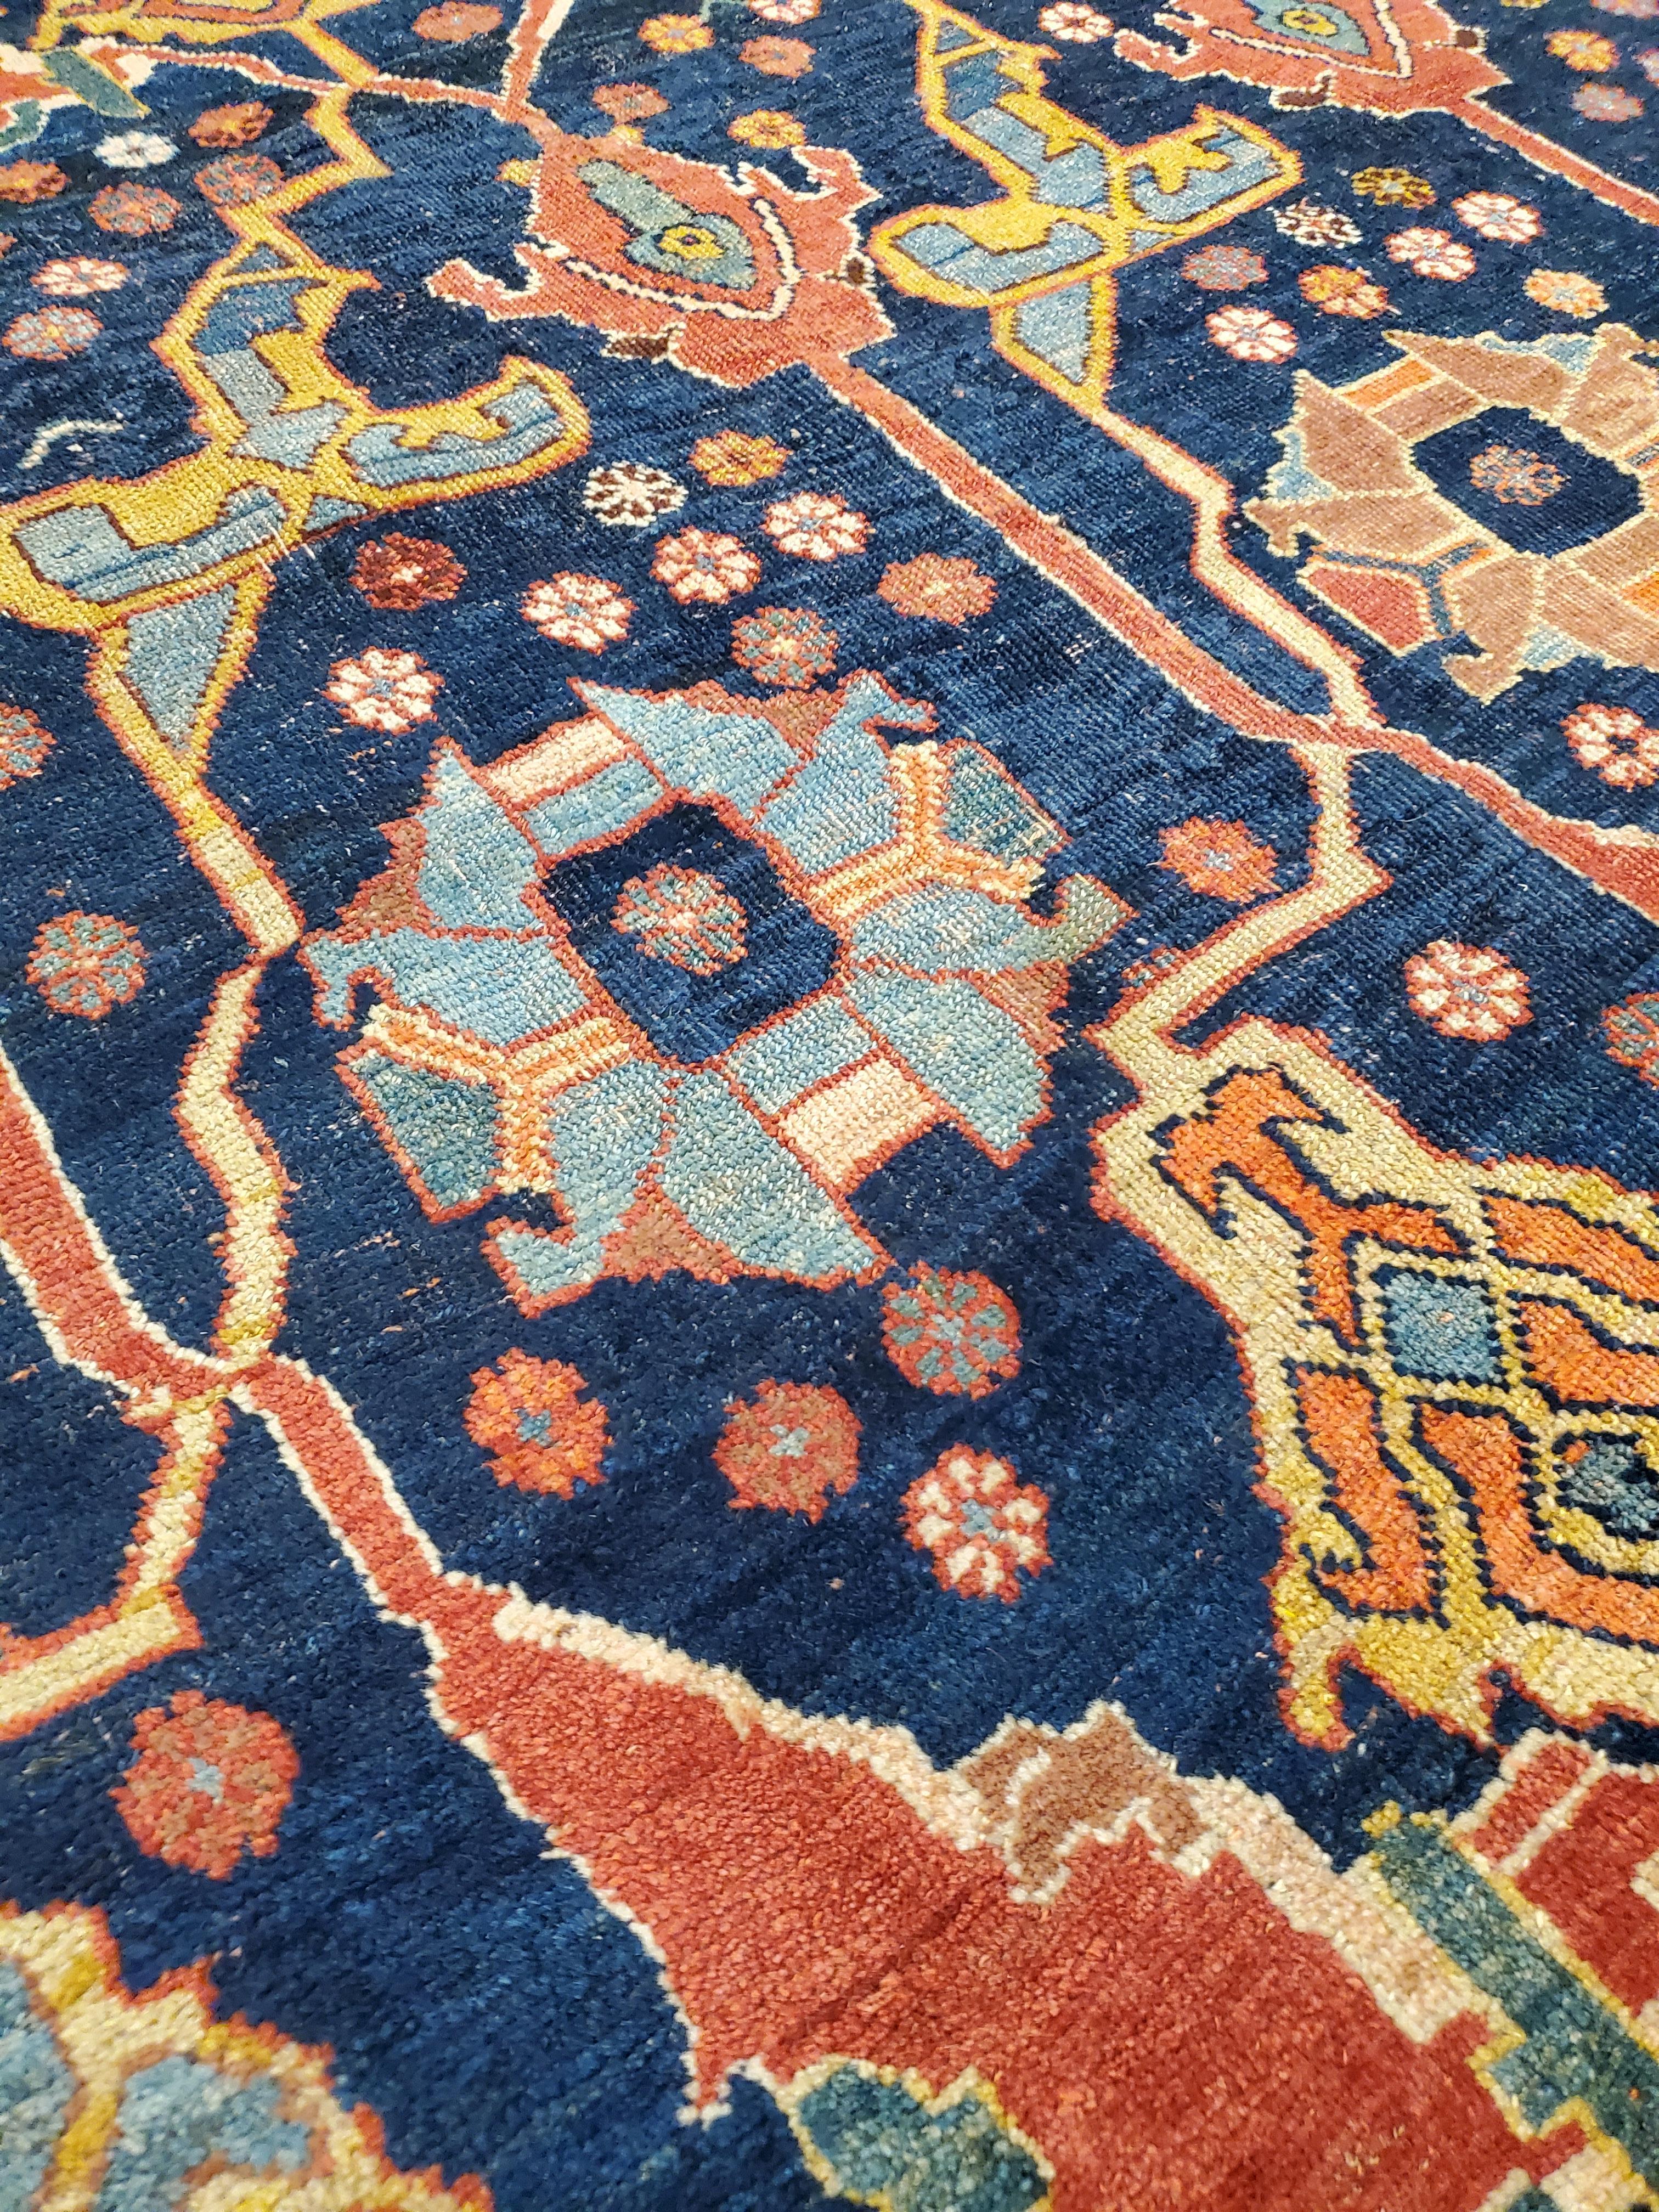 Persian Antique Bijar Carpet Oriental Carpet, Handmade, Navy, Red, Light Blue and Green For Sale